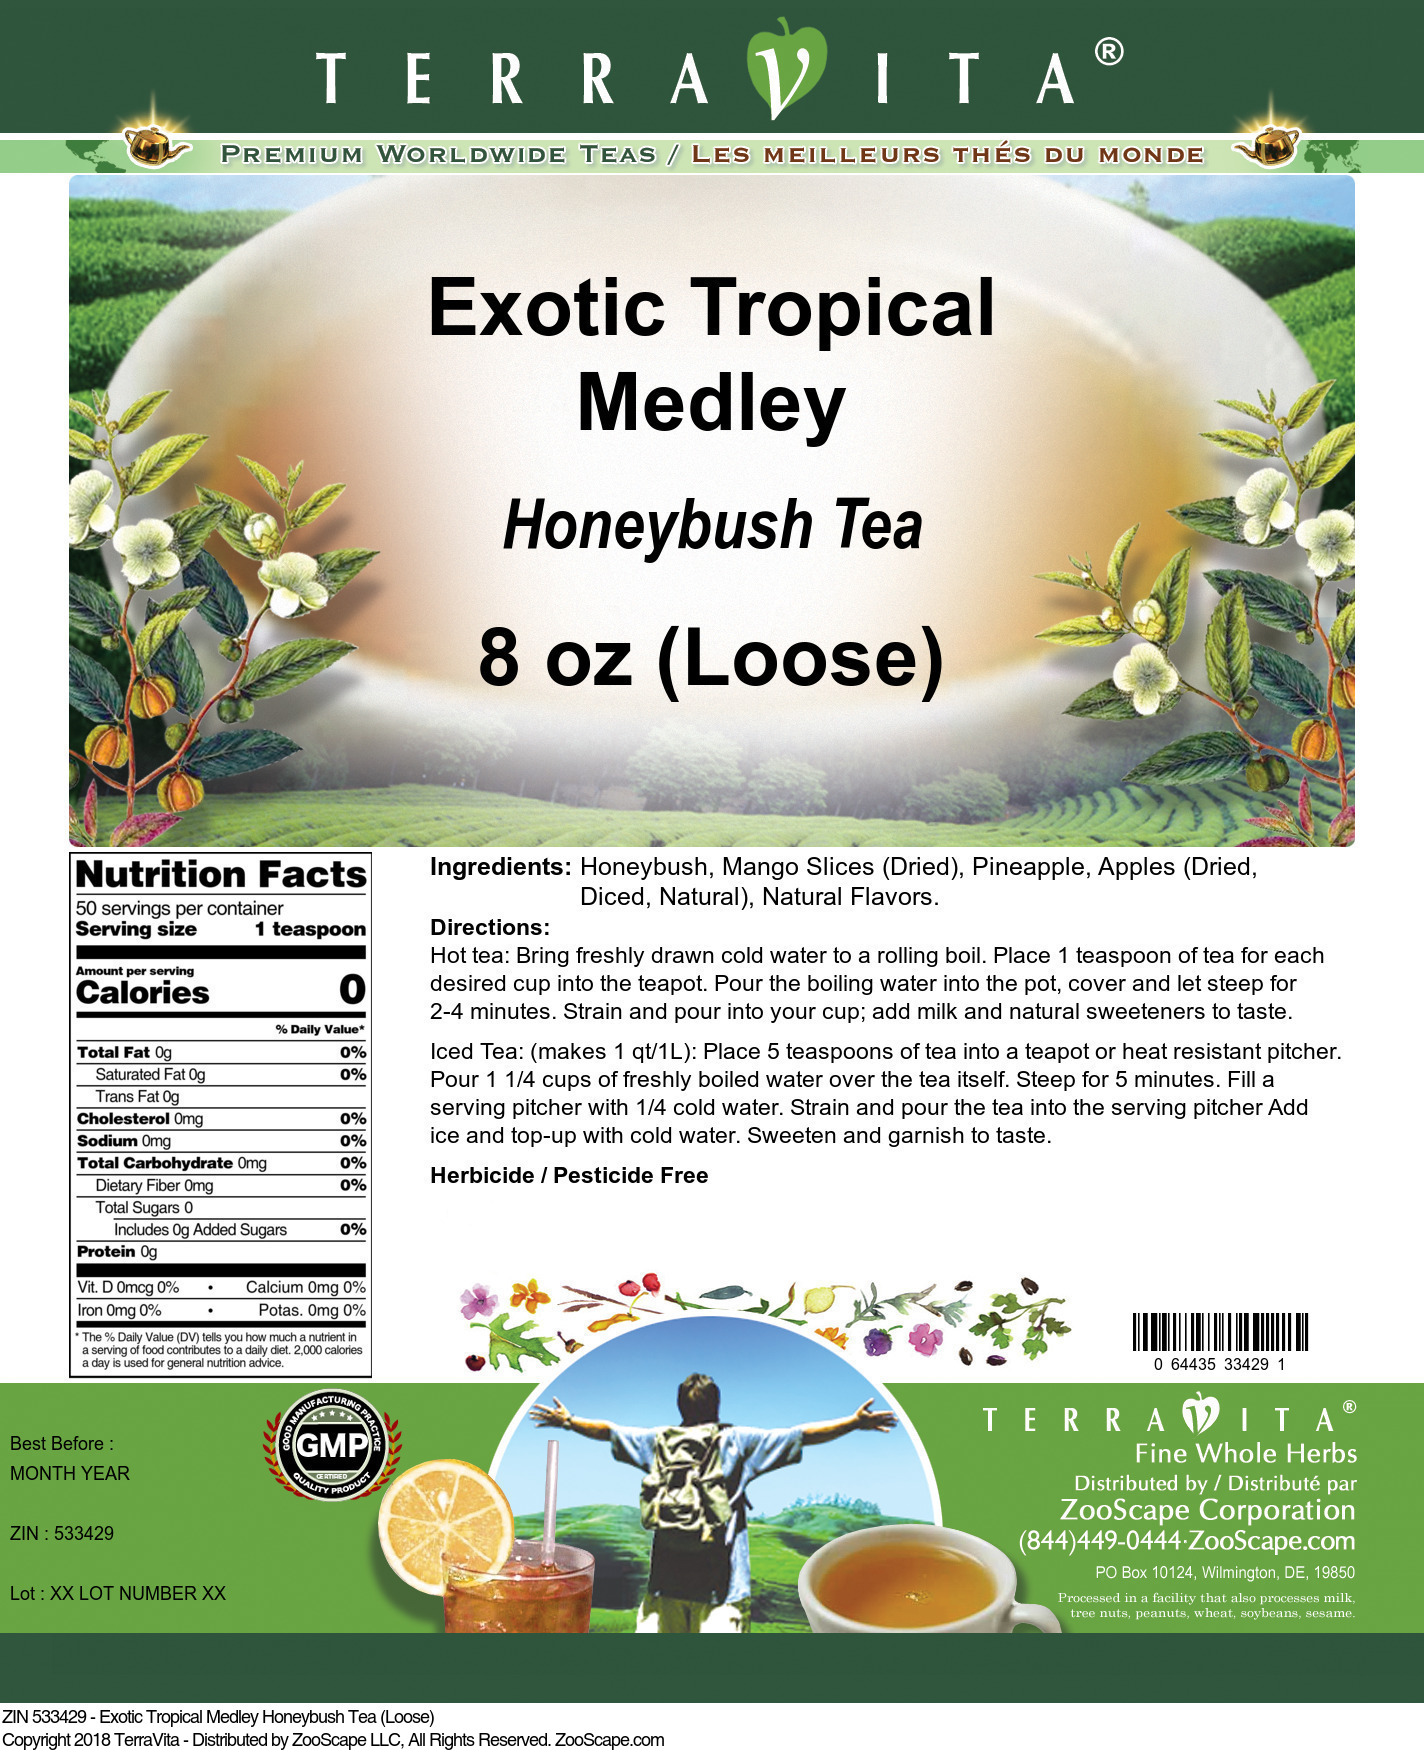 Exotic Tropical Medley Honeybush Tea (Loose) - Label